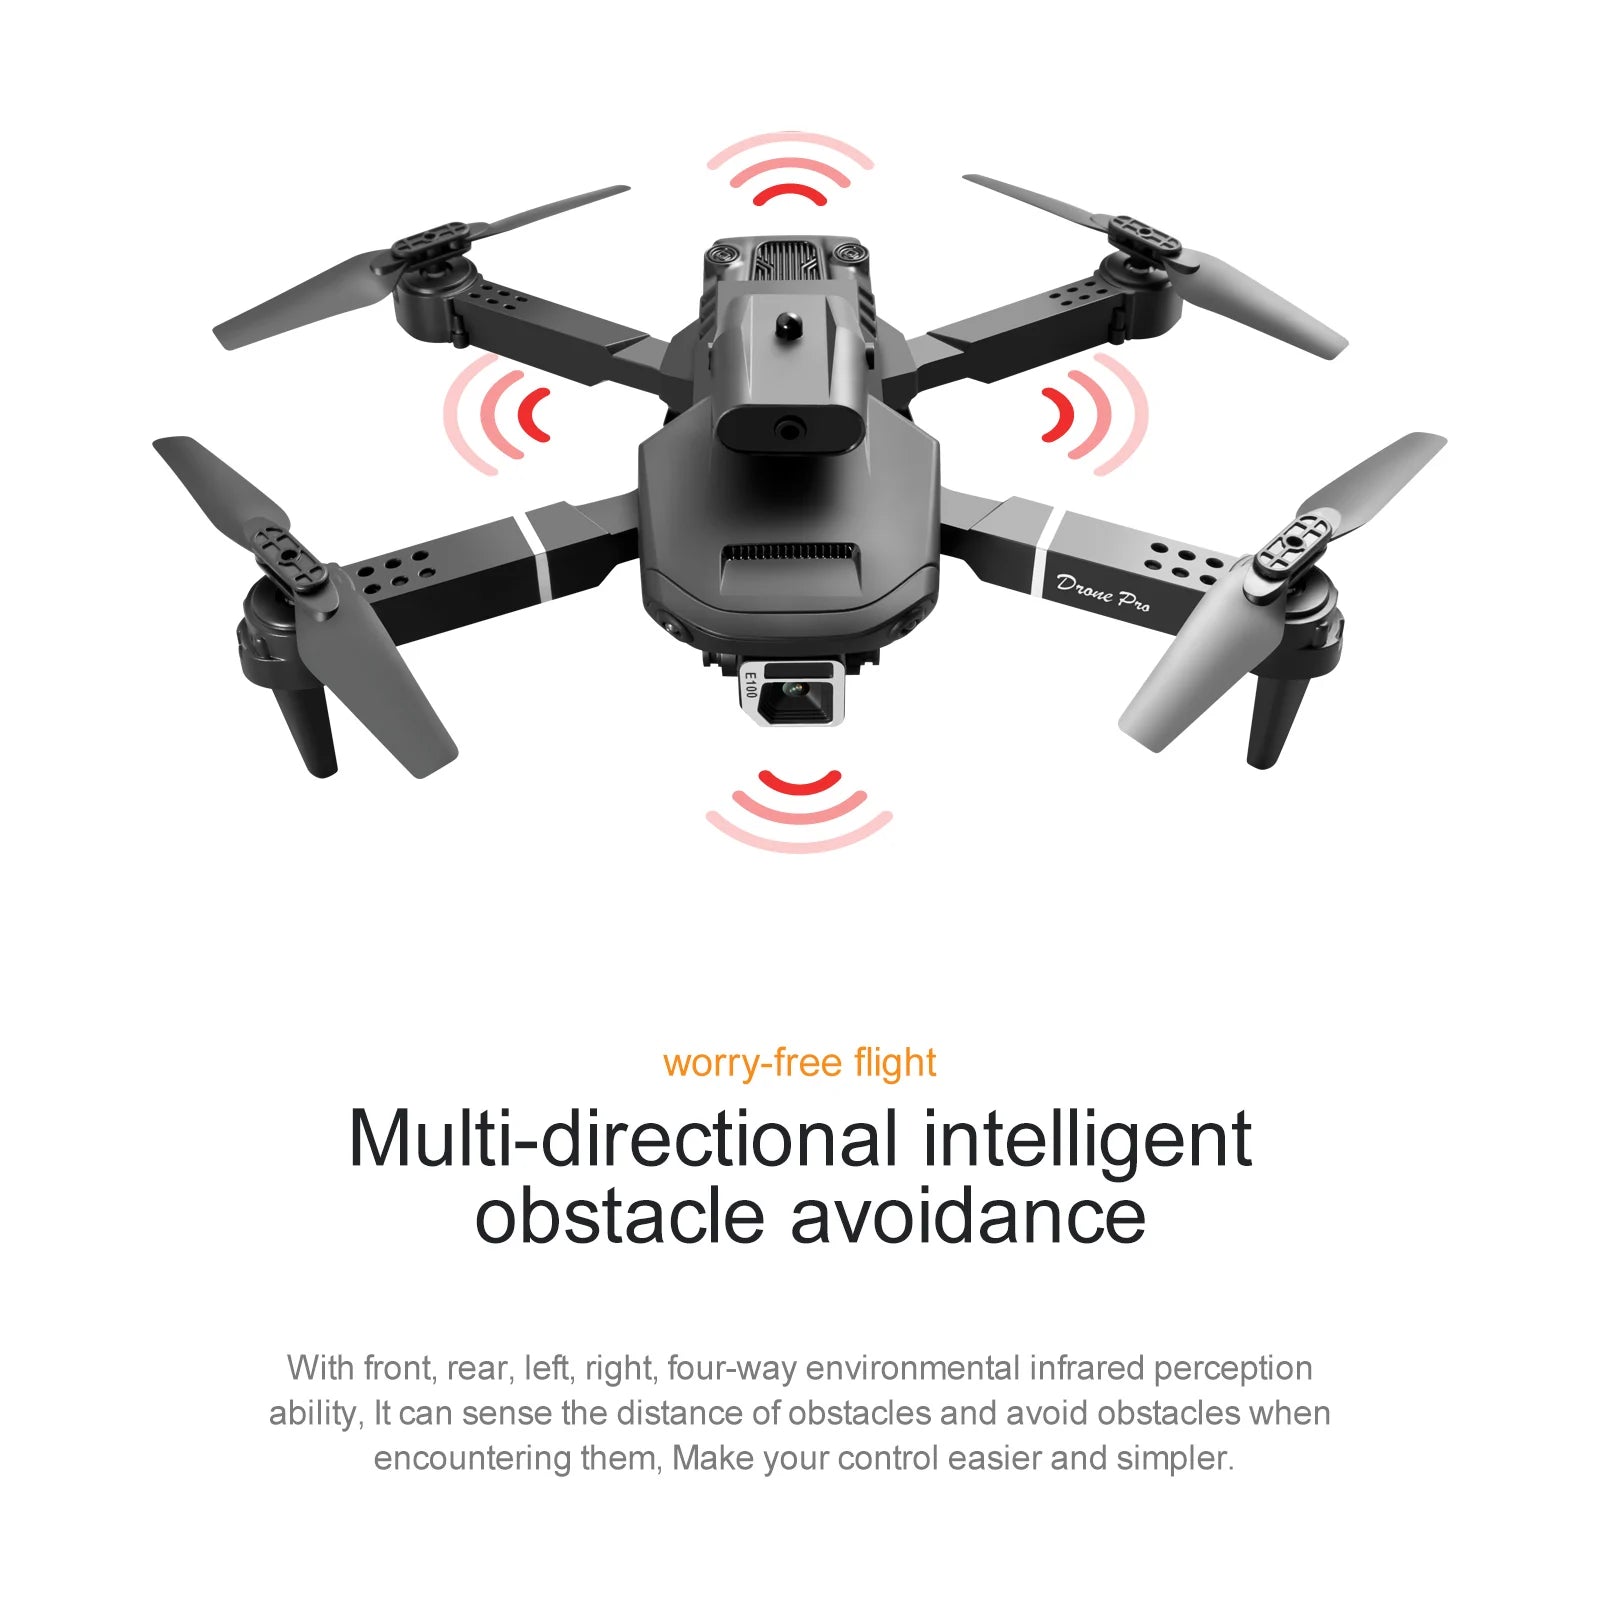 KBDFA E100 Mini Drone, drone pro has four-way environmental infrared perception ability 